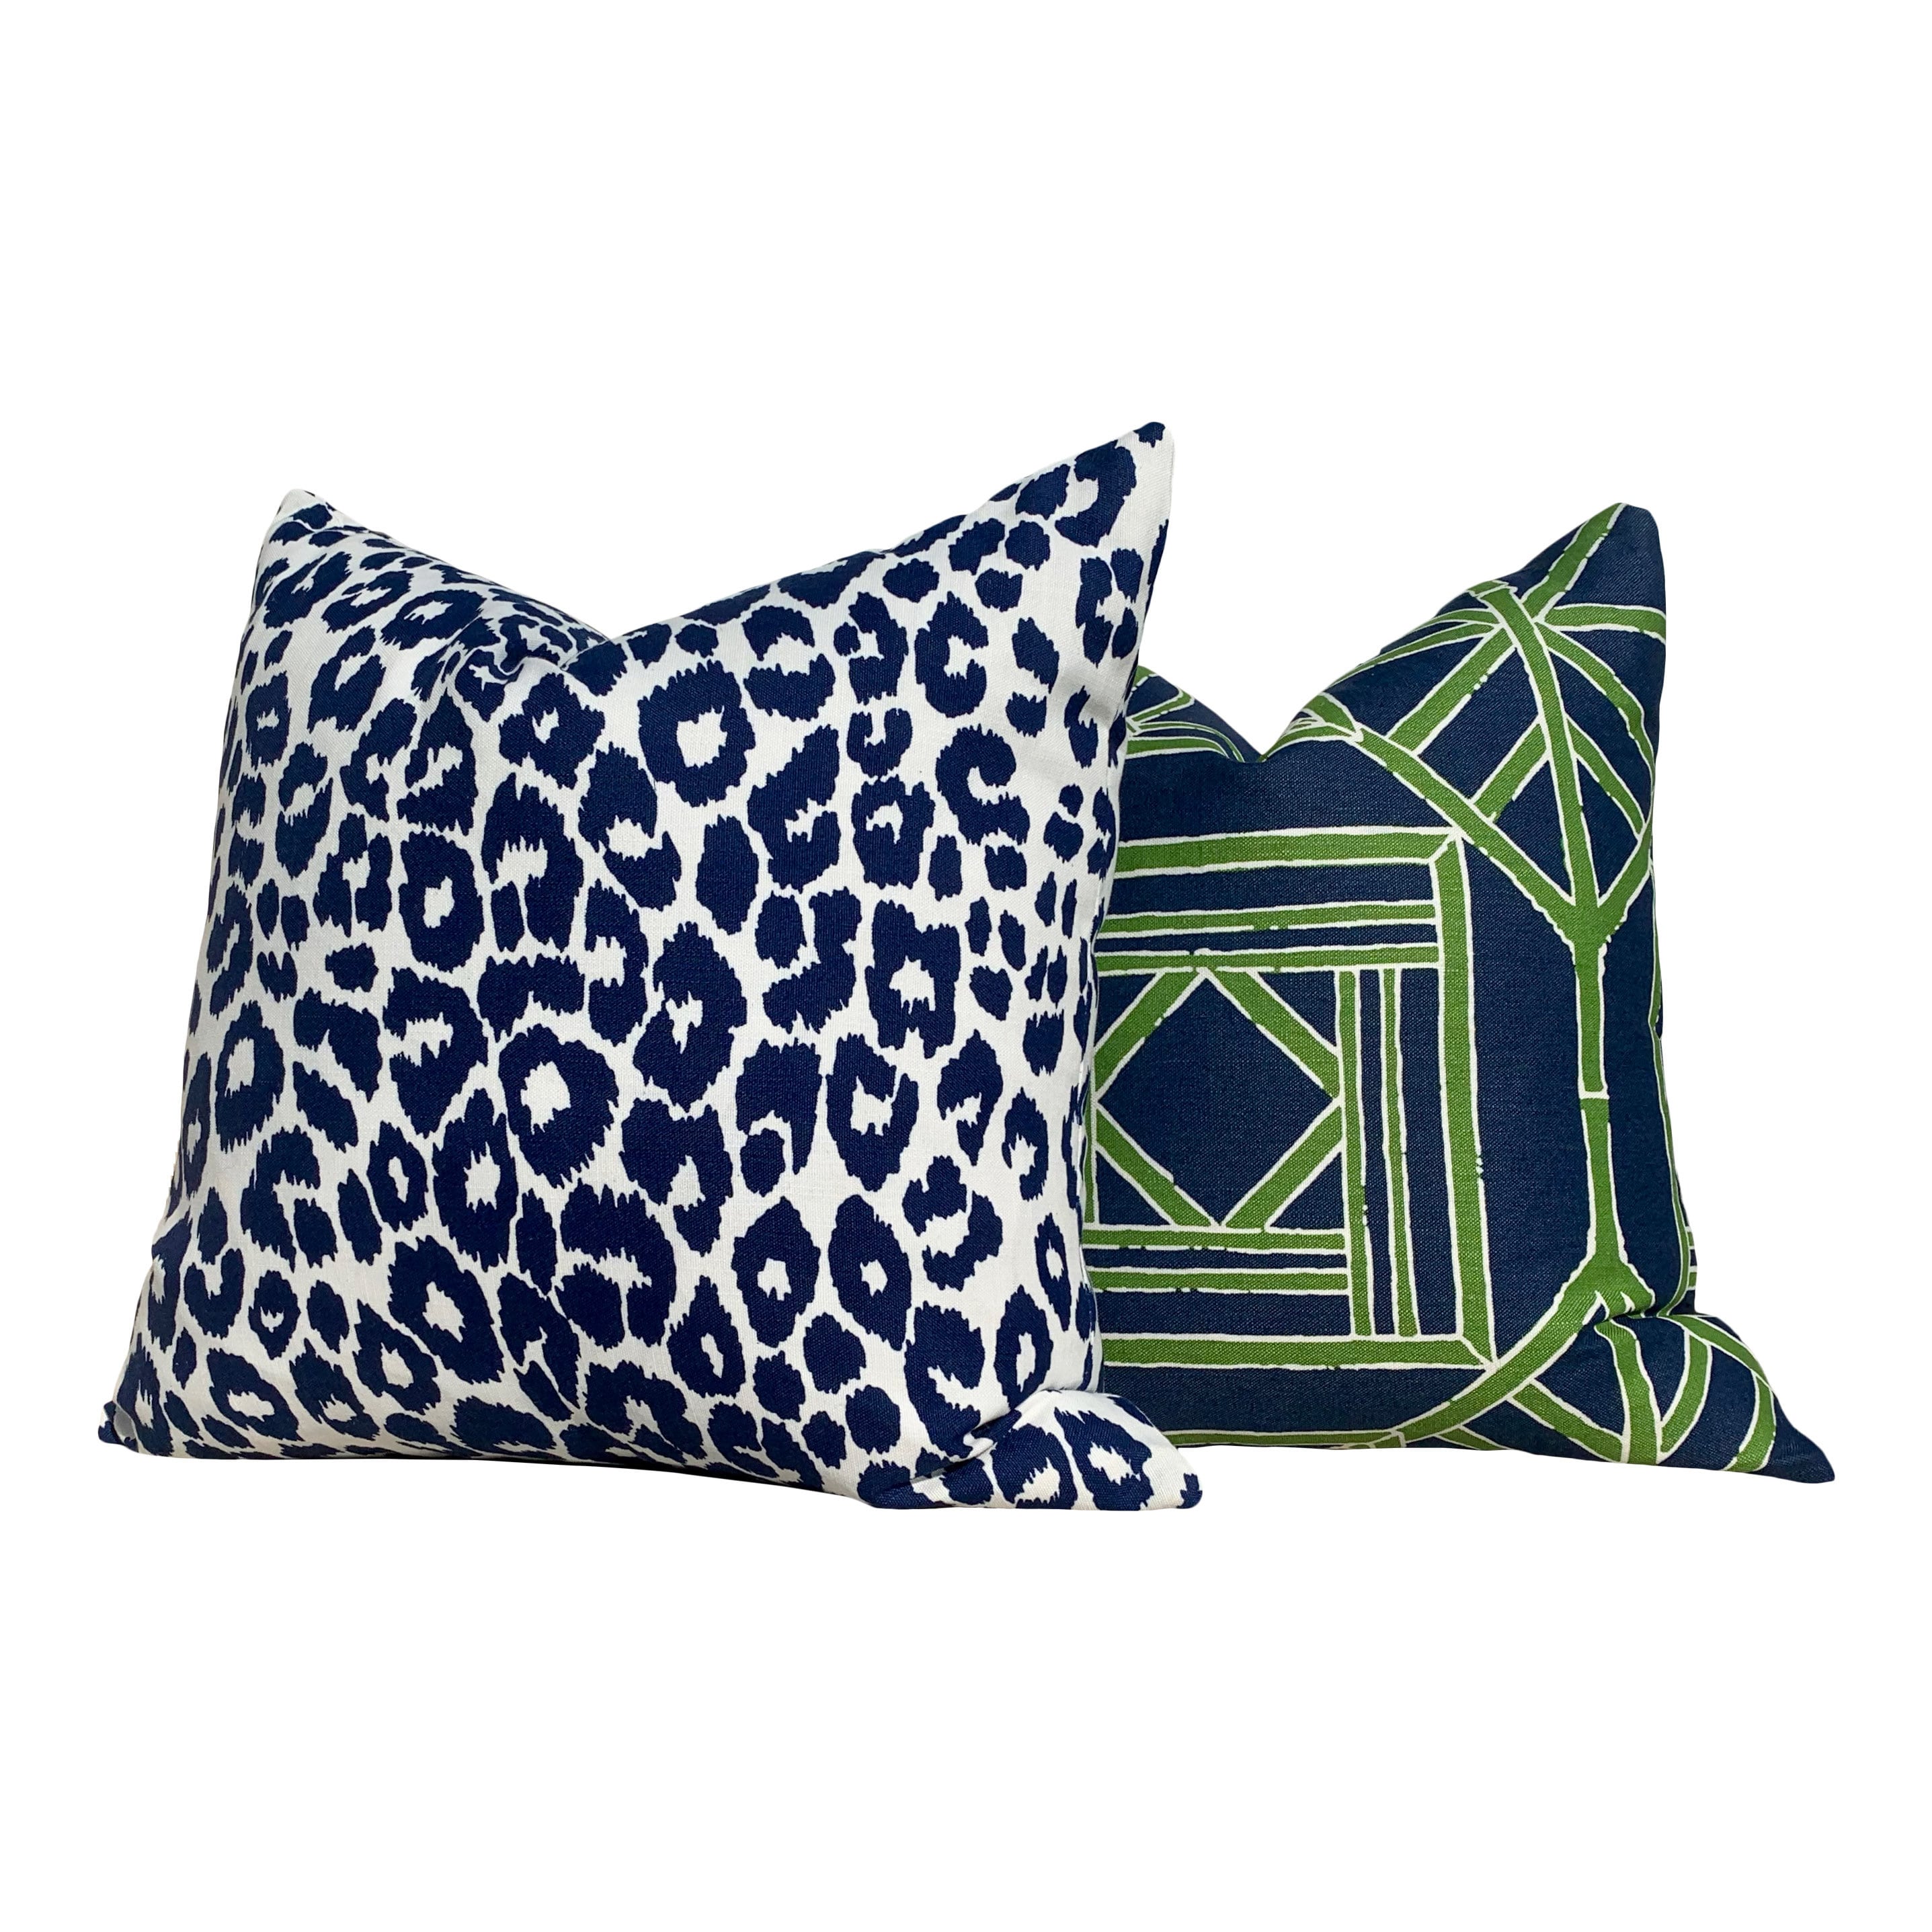 Indoor/Outdoor Schumacher Leopard Pillow in White and Blue. Decorative lumbar Pillow, designer cushion cover, accent pillow, outdoor pillow